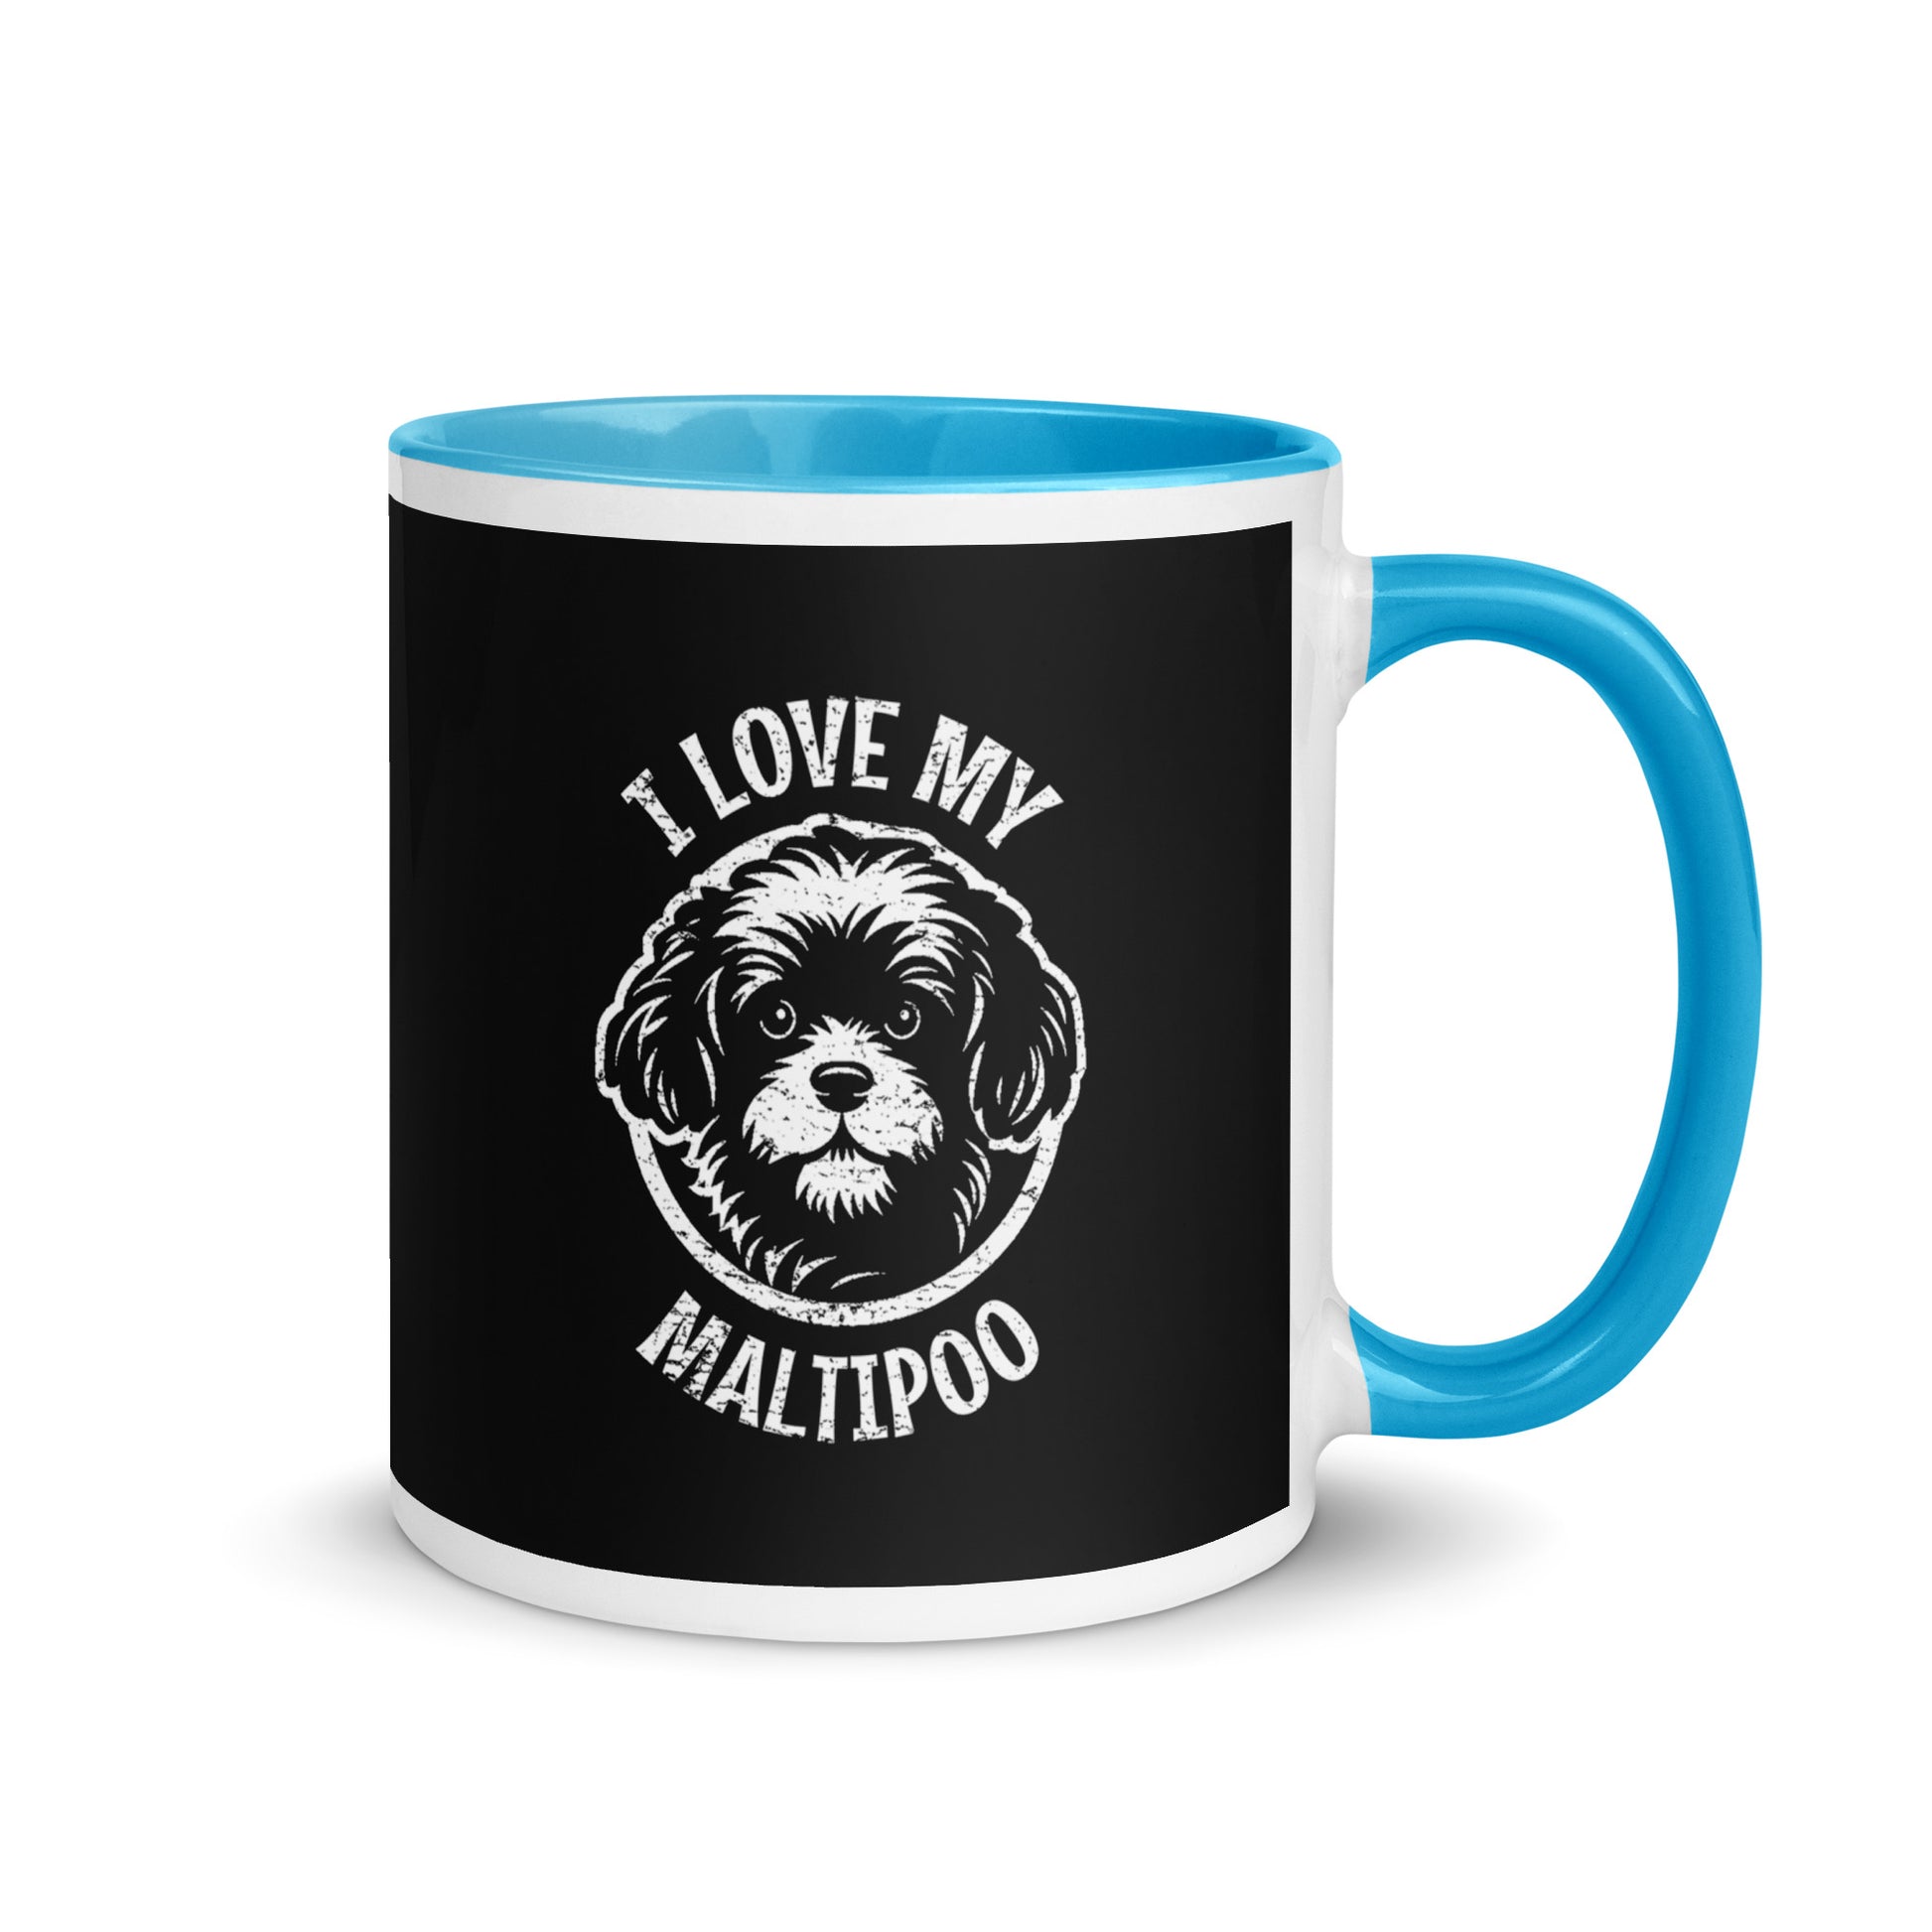 Maltipoo Mug, Maltipoo gift, gift for dog mom, custom dog gift, dog owner gift, pet memorial gift